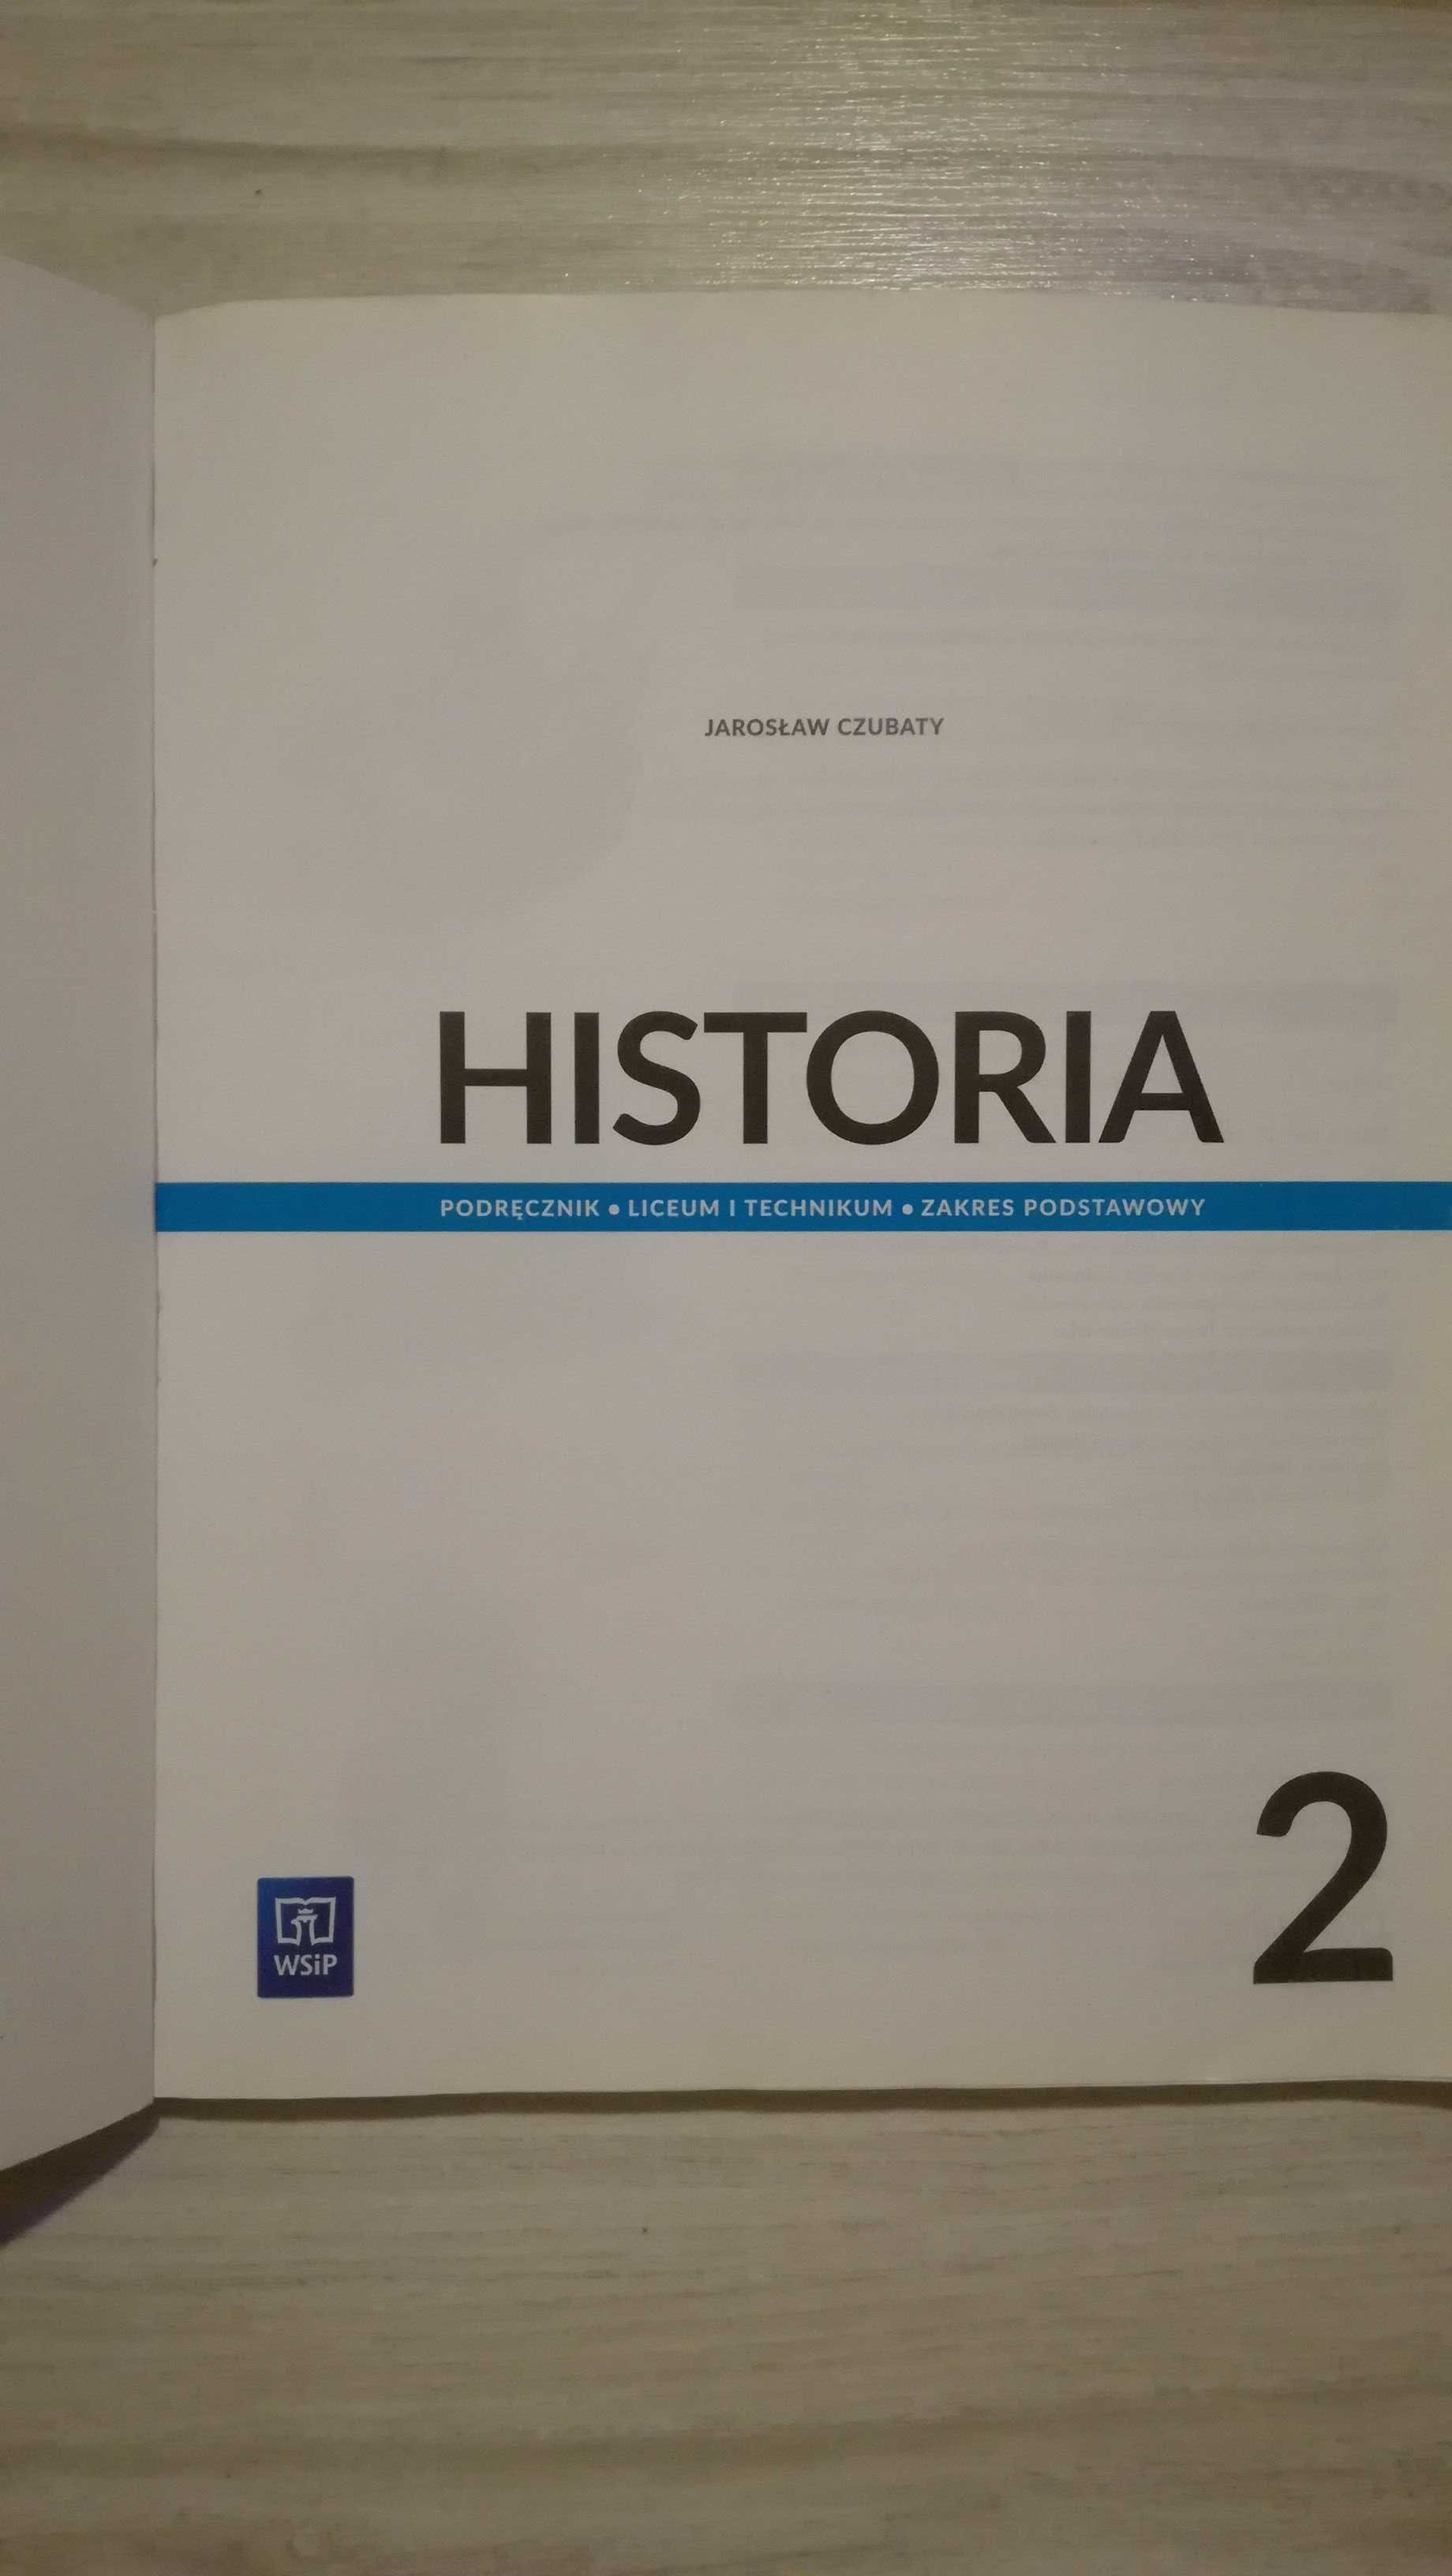 Historia WSiP 2 podręcznik, podstawa